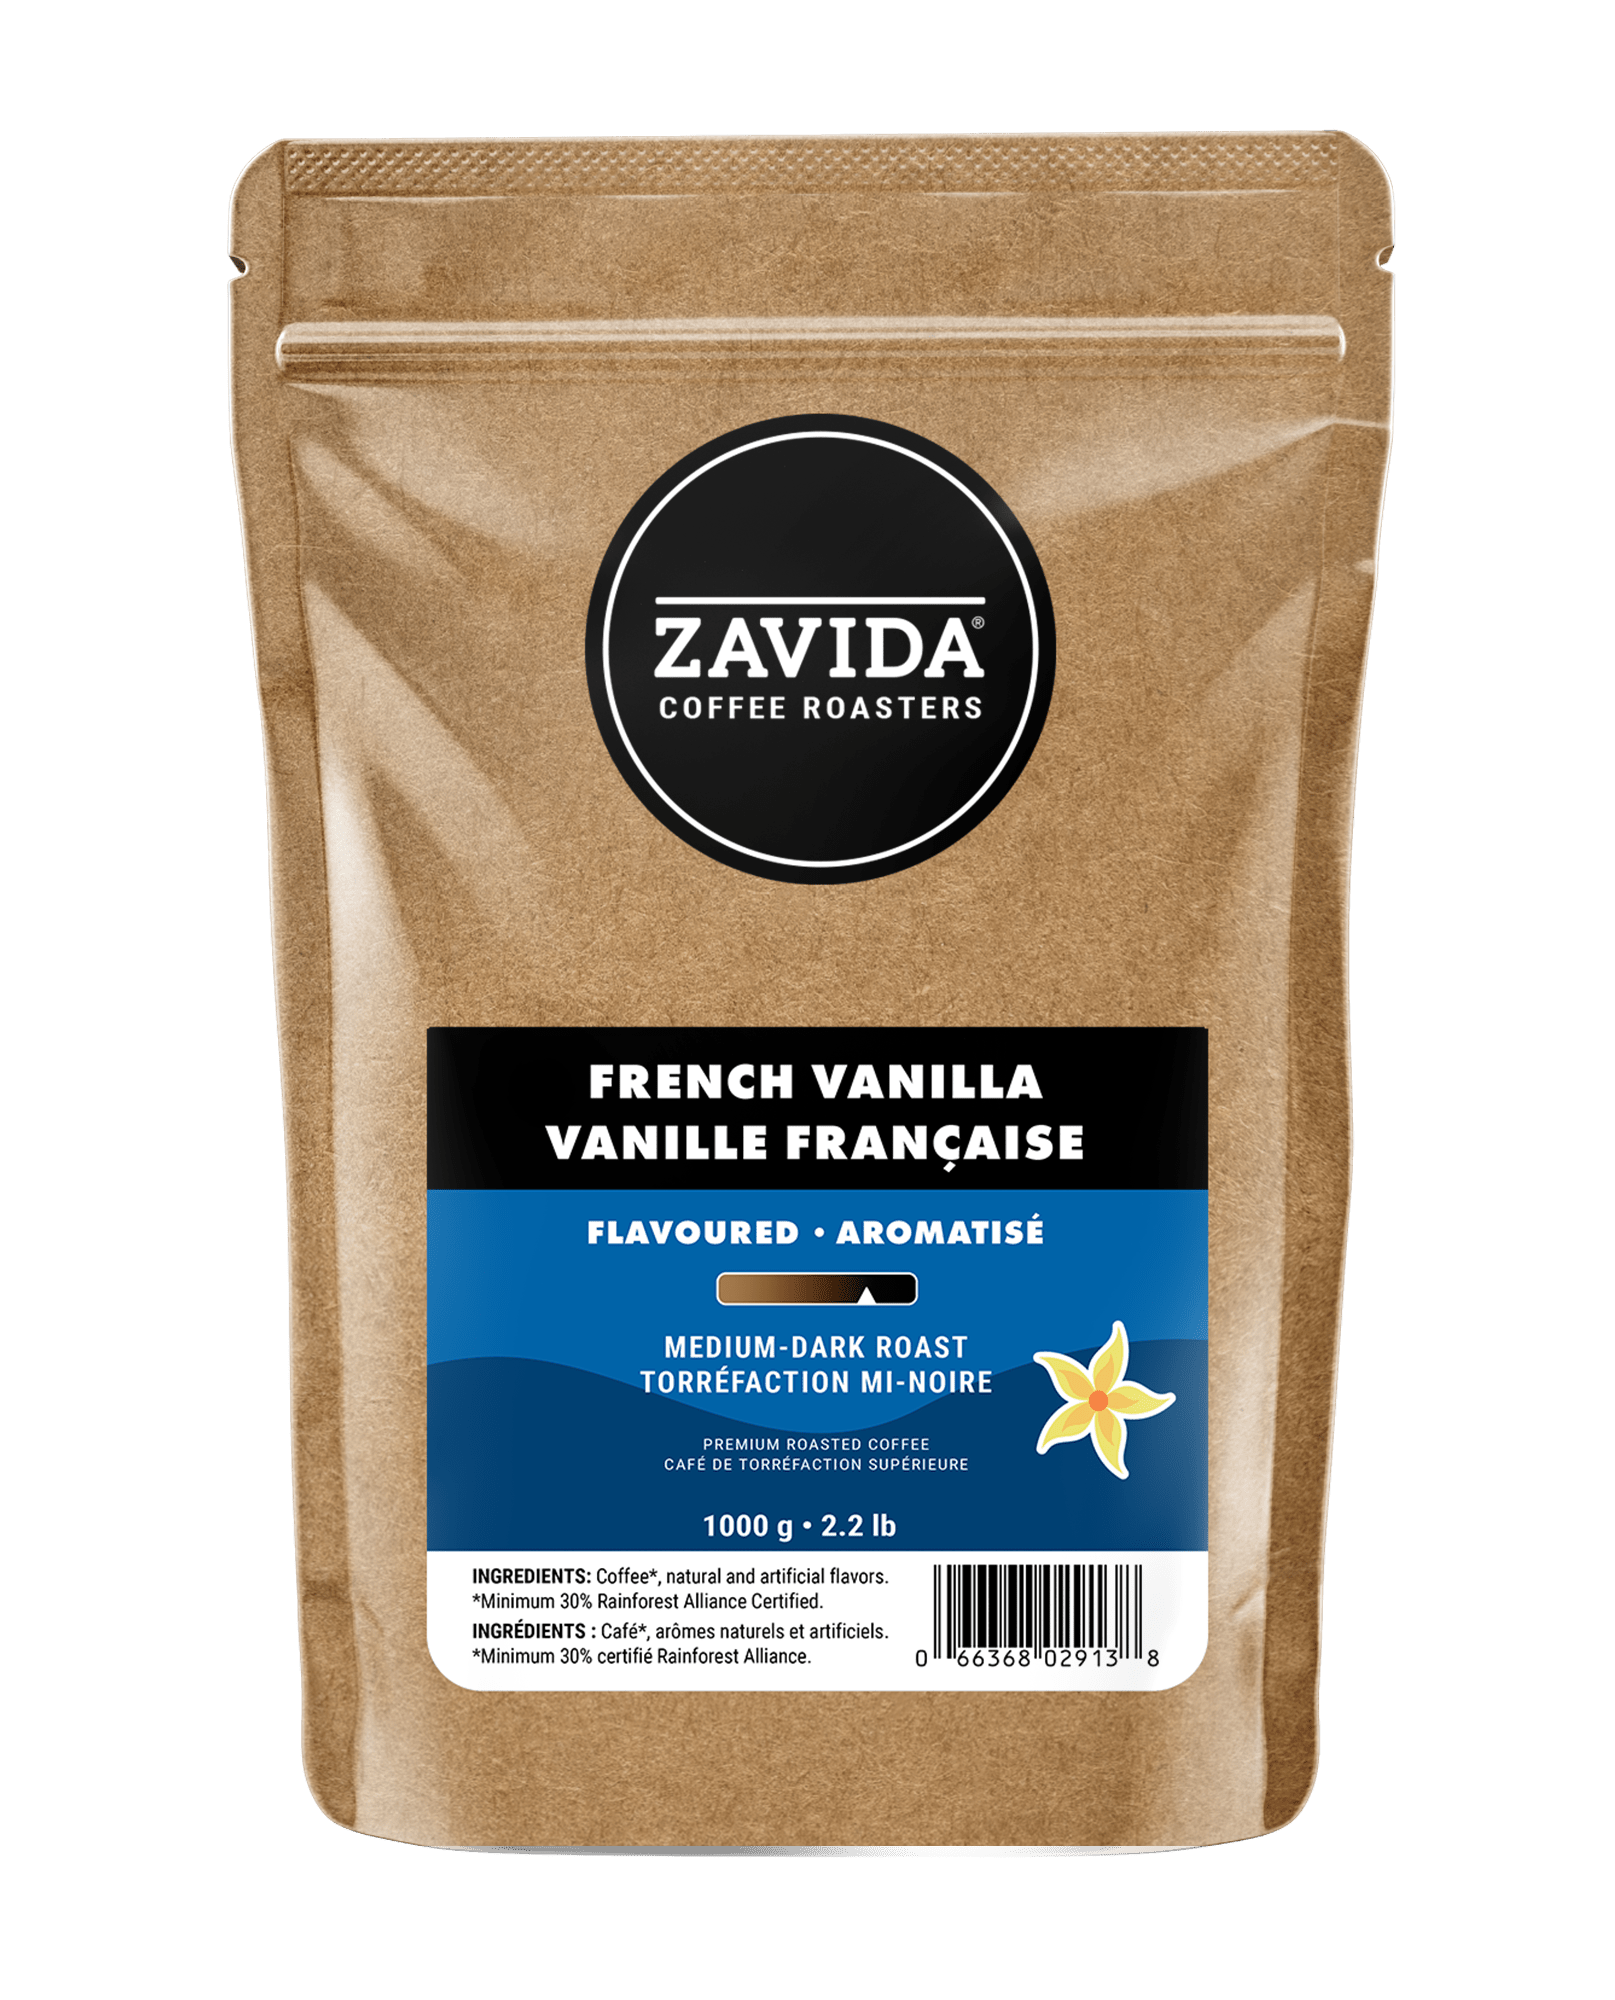 LIMITED EDITION French Vanilla Coffee - 1 kg - Zavida Coffee